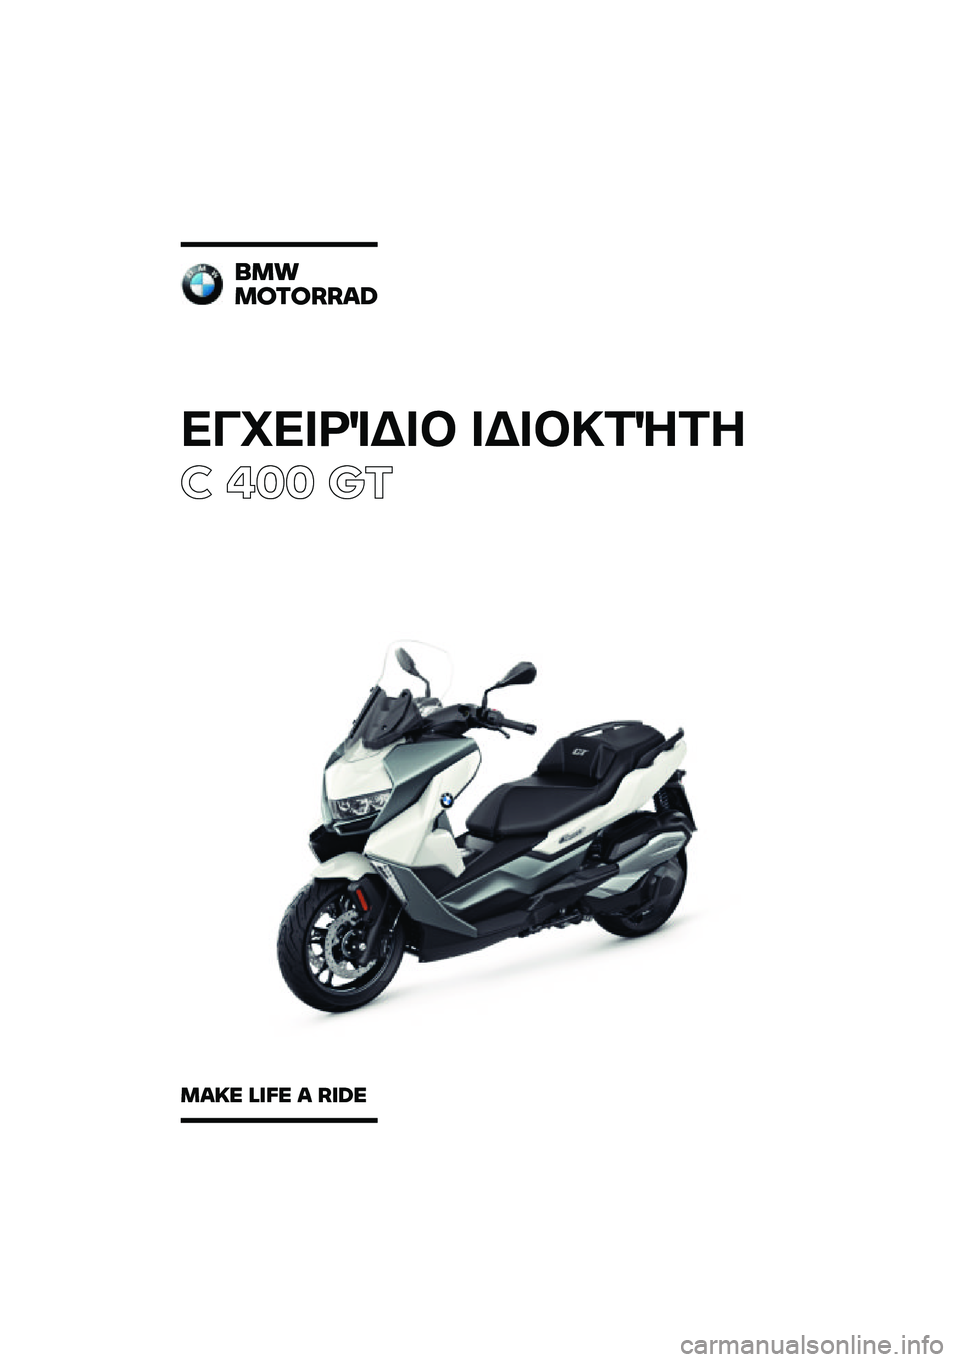 BMW MOTORRAD C 400 GT 2020  Εγχειρίδιο ιδιοκτήτη (in Greek) ��������\b��	 ��\b��	�
��\f��
���
�������\b�	
��\b�
� �\f�
�� �\b ��
�	� 